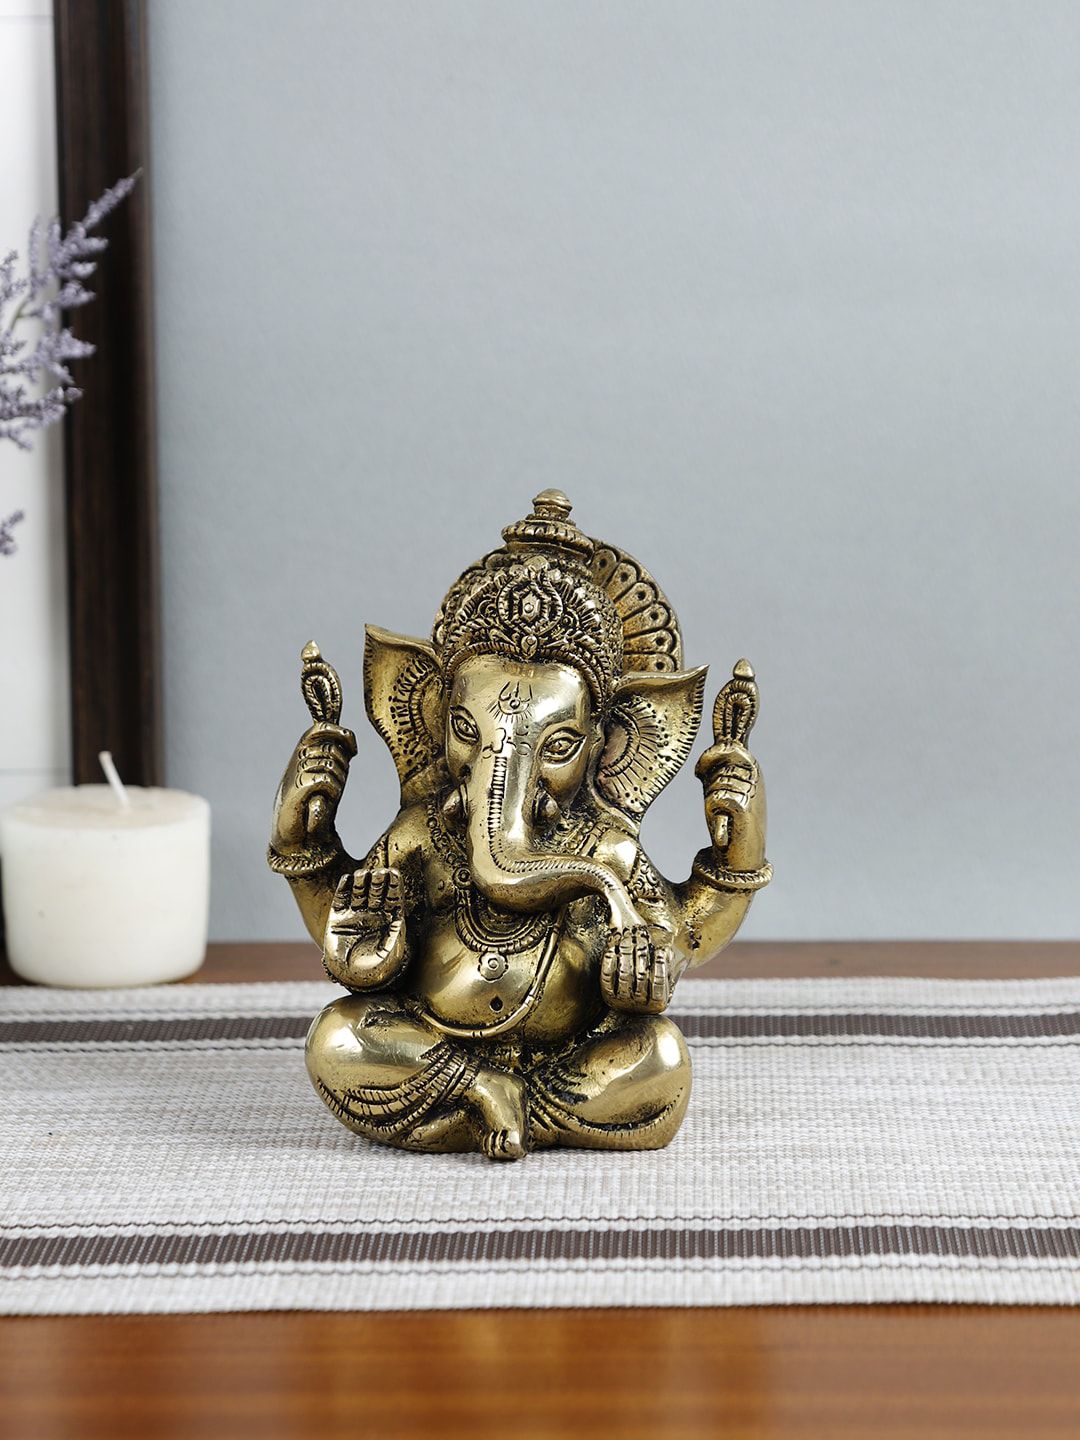 Imli Street Gold-Toned Lord Ganesha Idol Showpiece Price in India